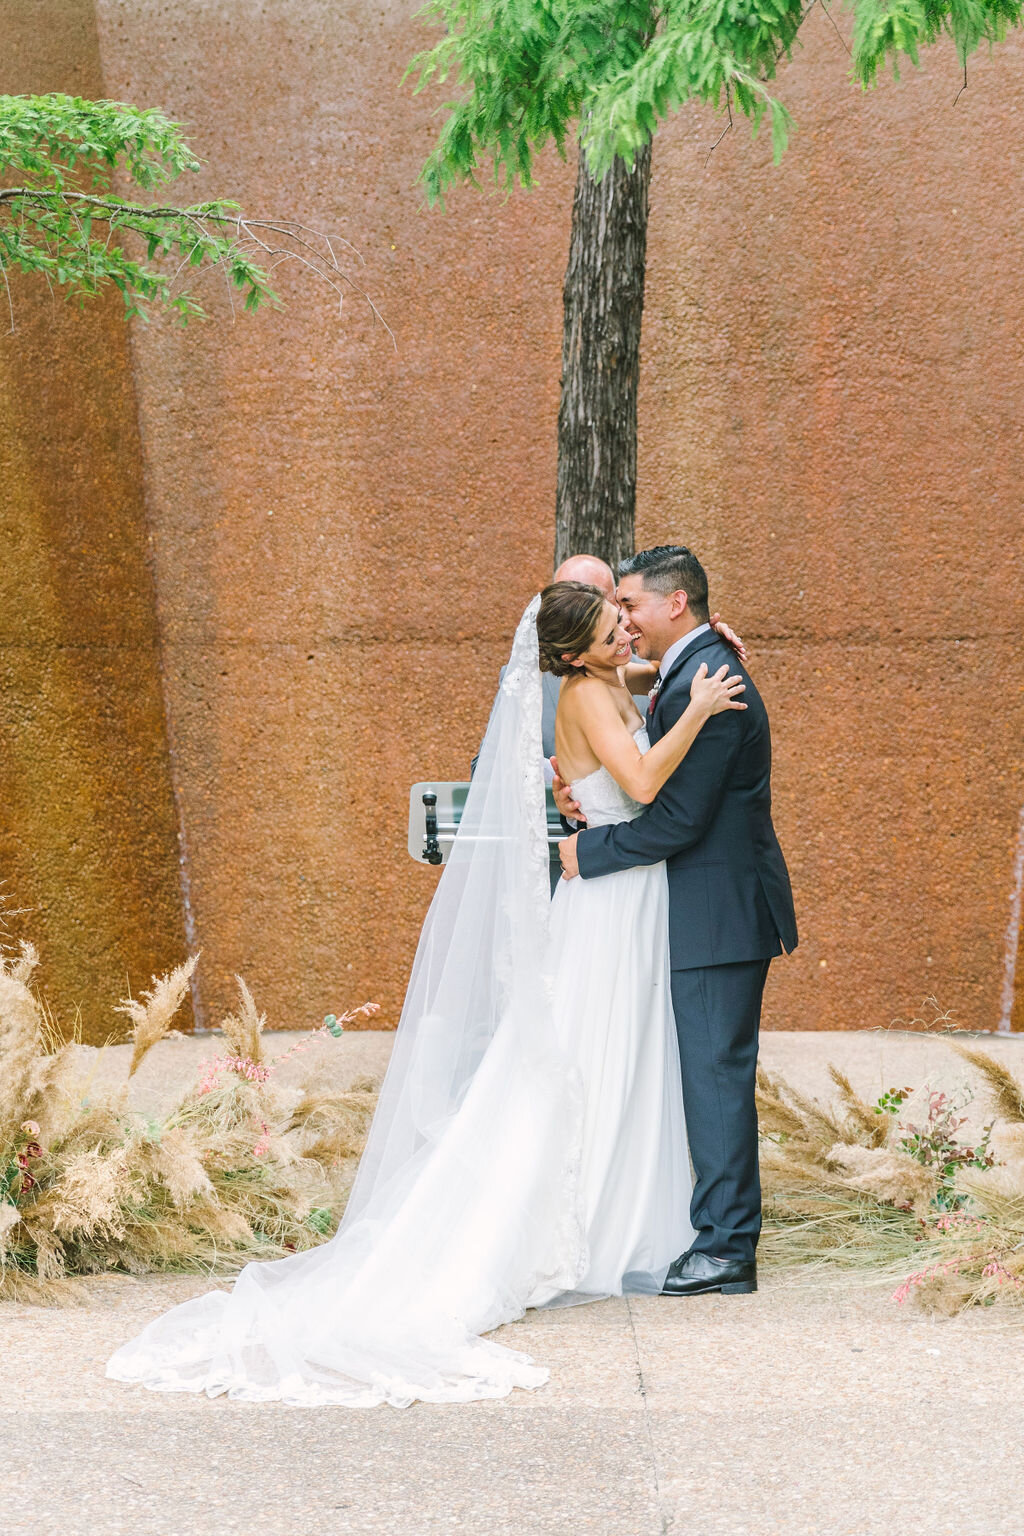 Ellen-Ashton-Photography-Dallas-Wedding-Photographers-Girt-and-gold-events-weddings119.jpg